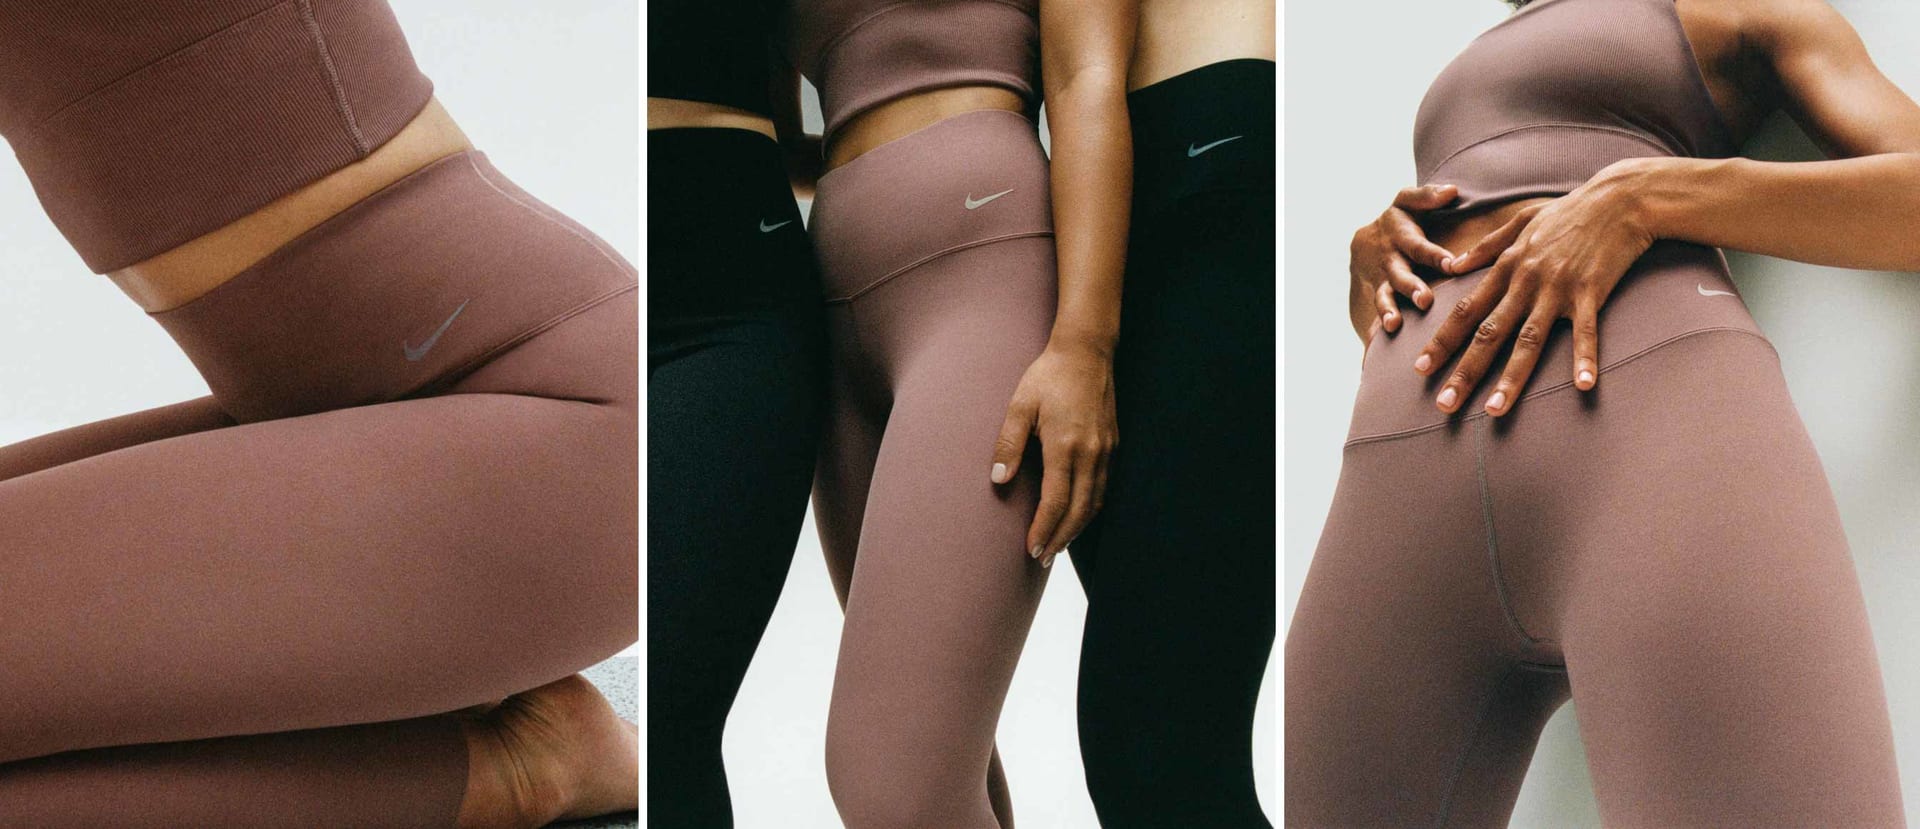 $50 NEW Nike Sportswear Leg-A-See Women's 7/8 Leggings Pink DB3903 SMALL